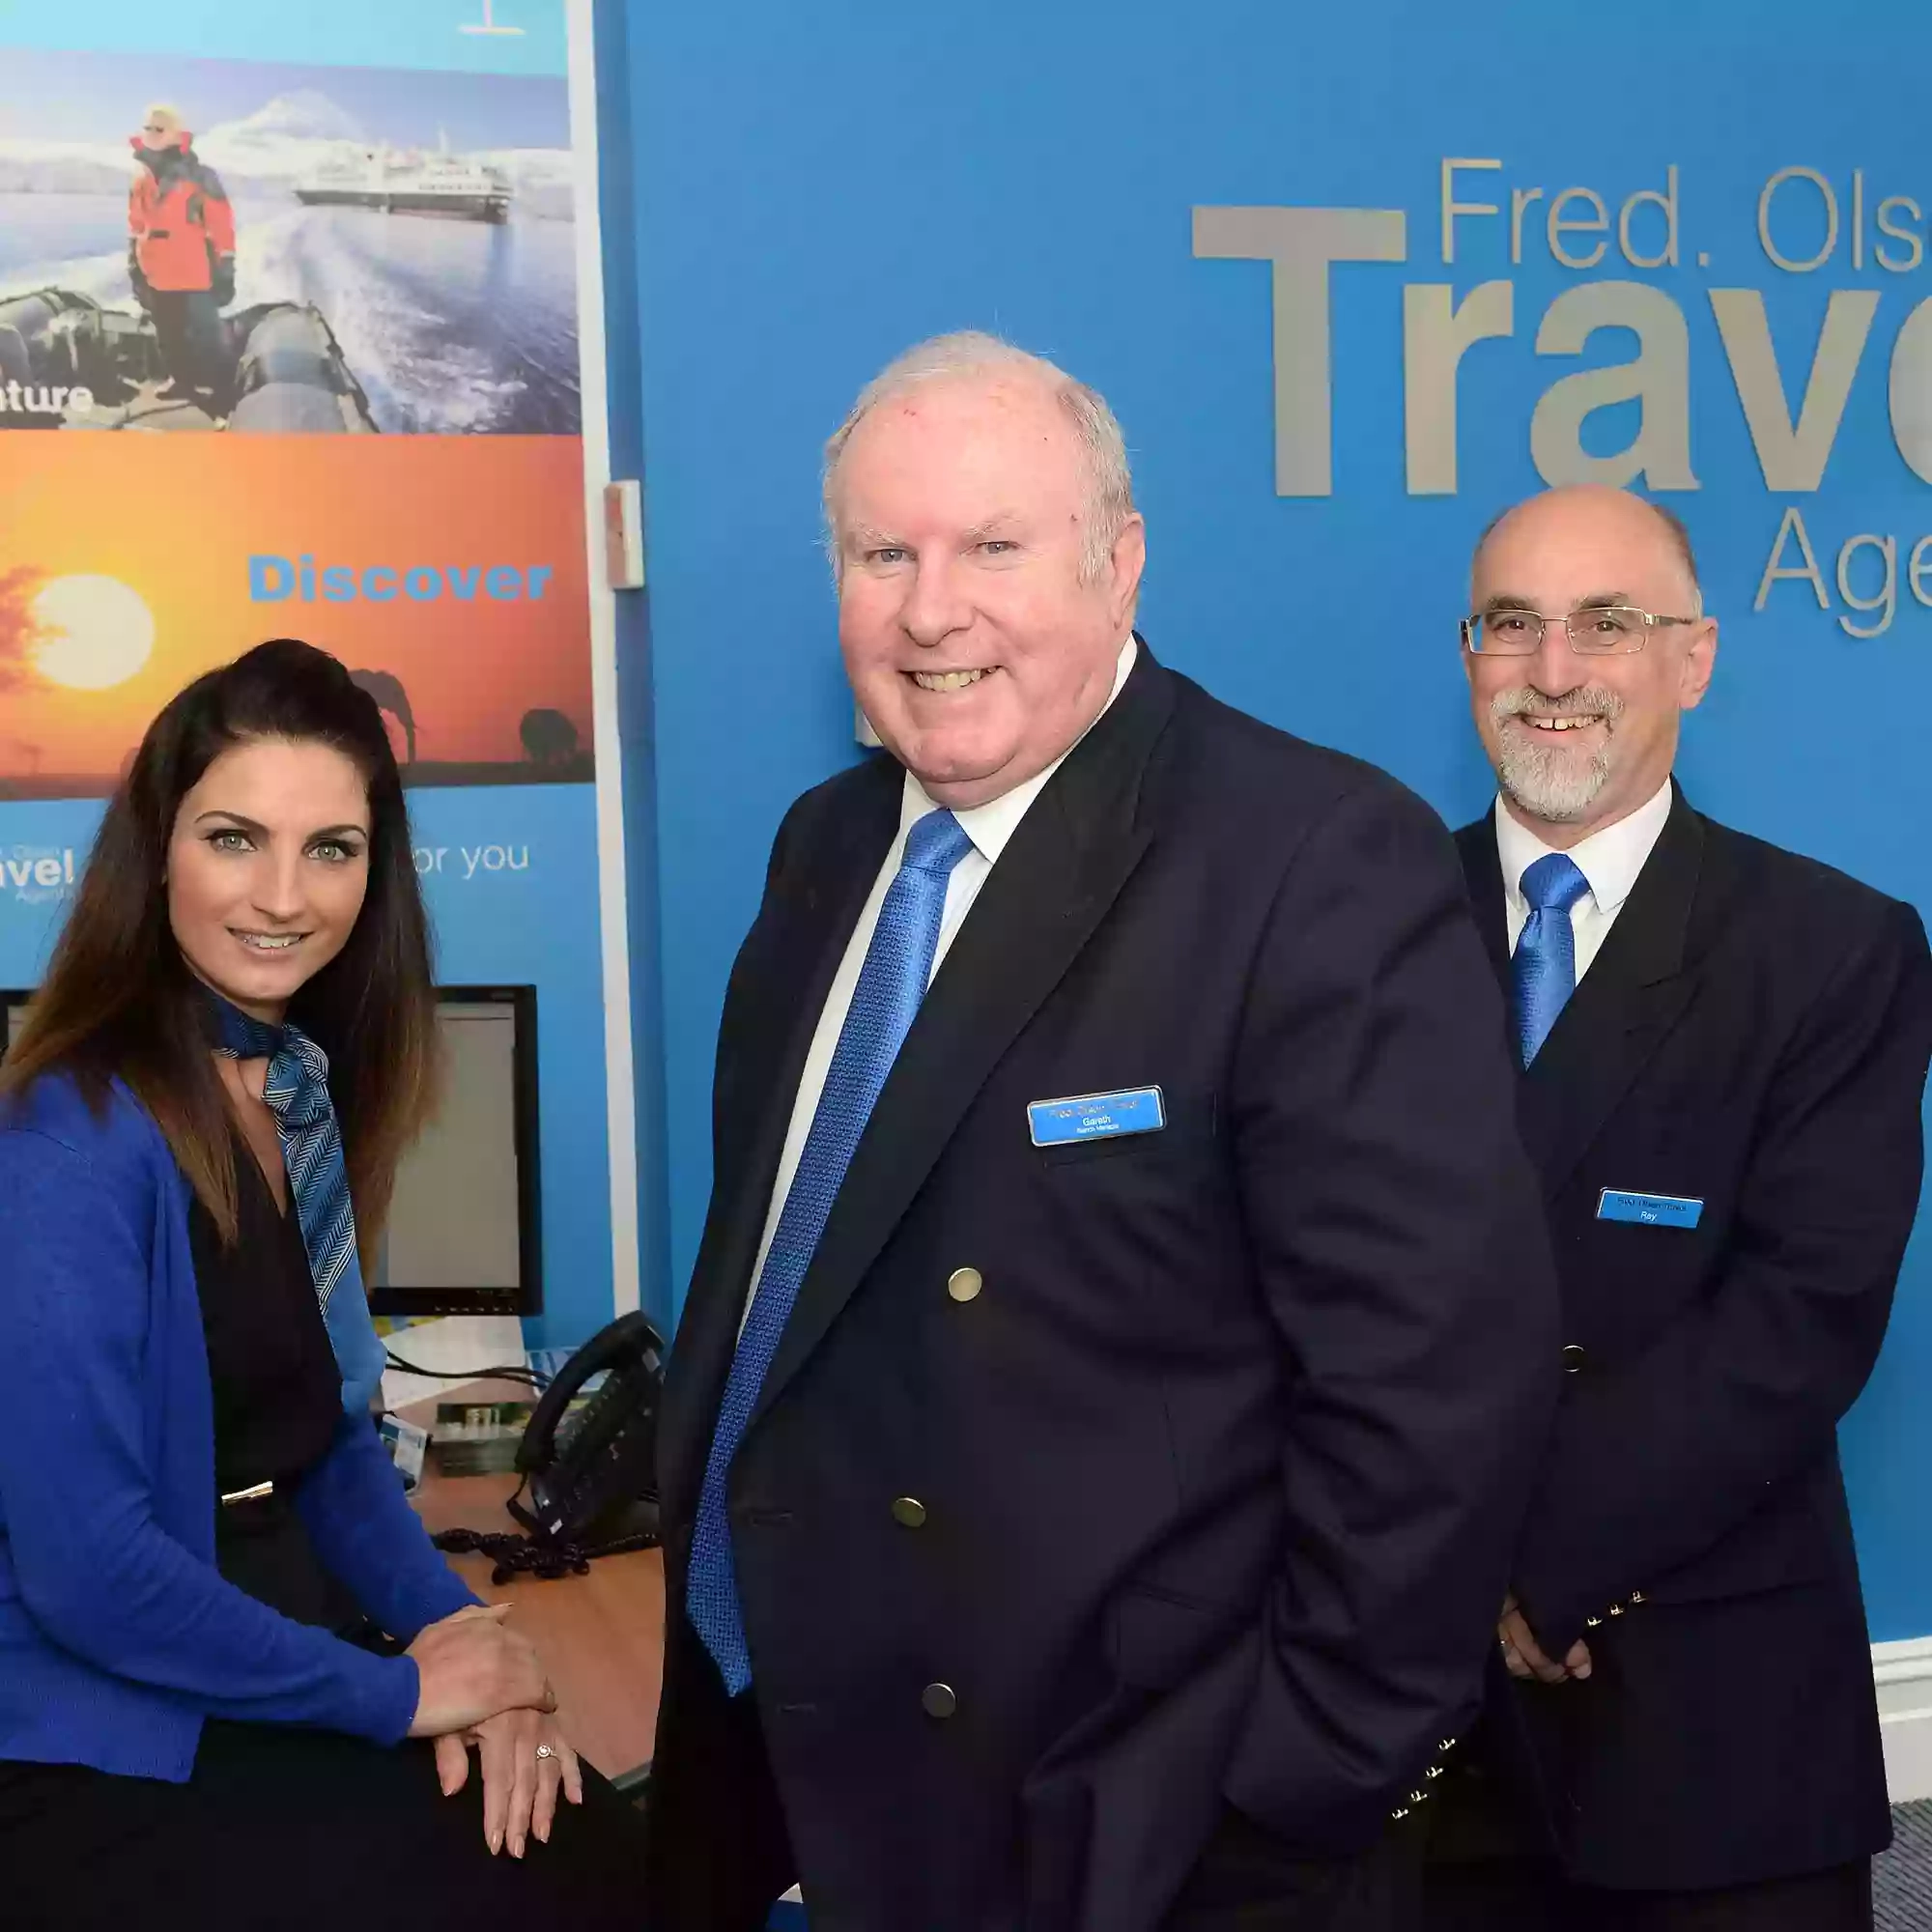 Fred. Olsen Travel Agents